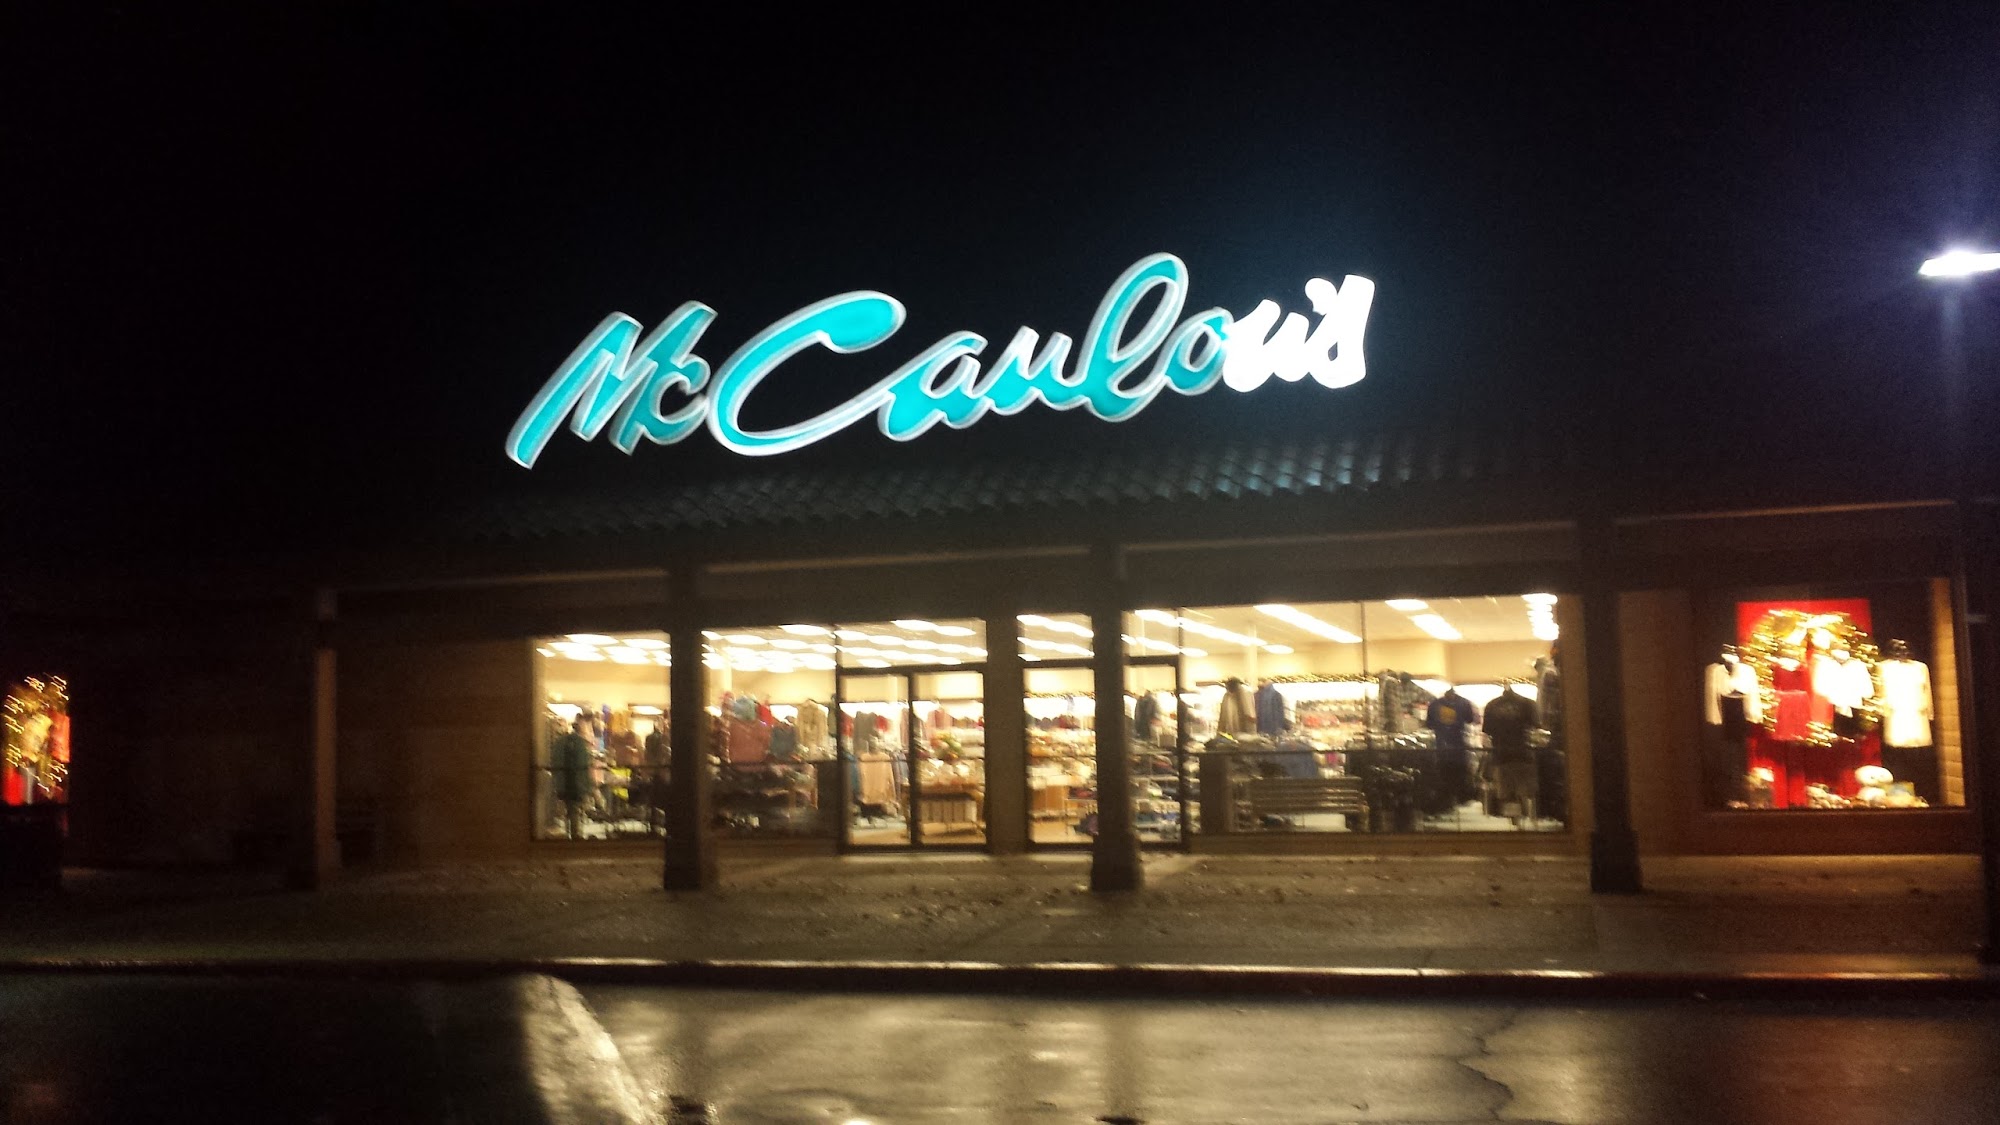 McCaulou's Department Store